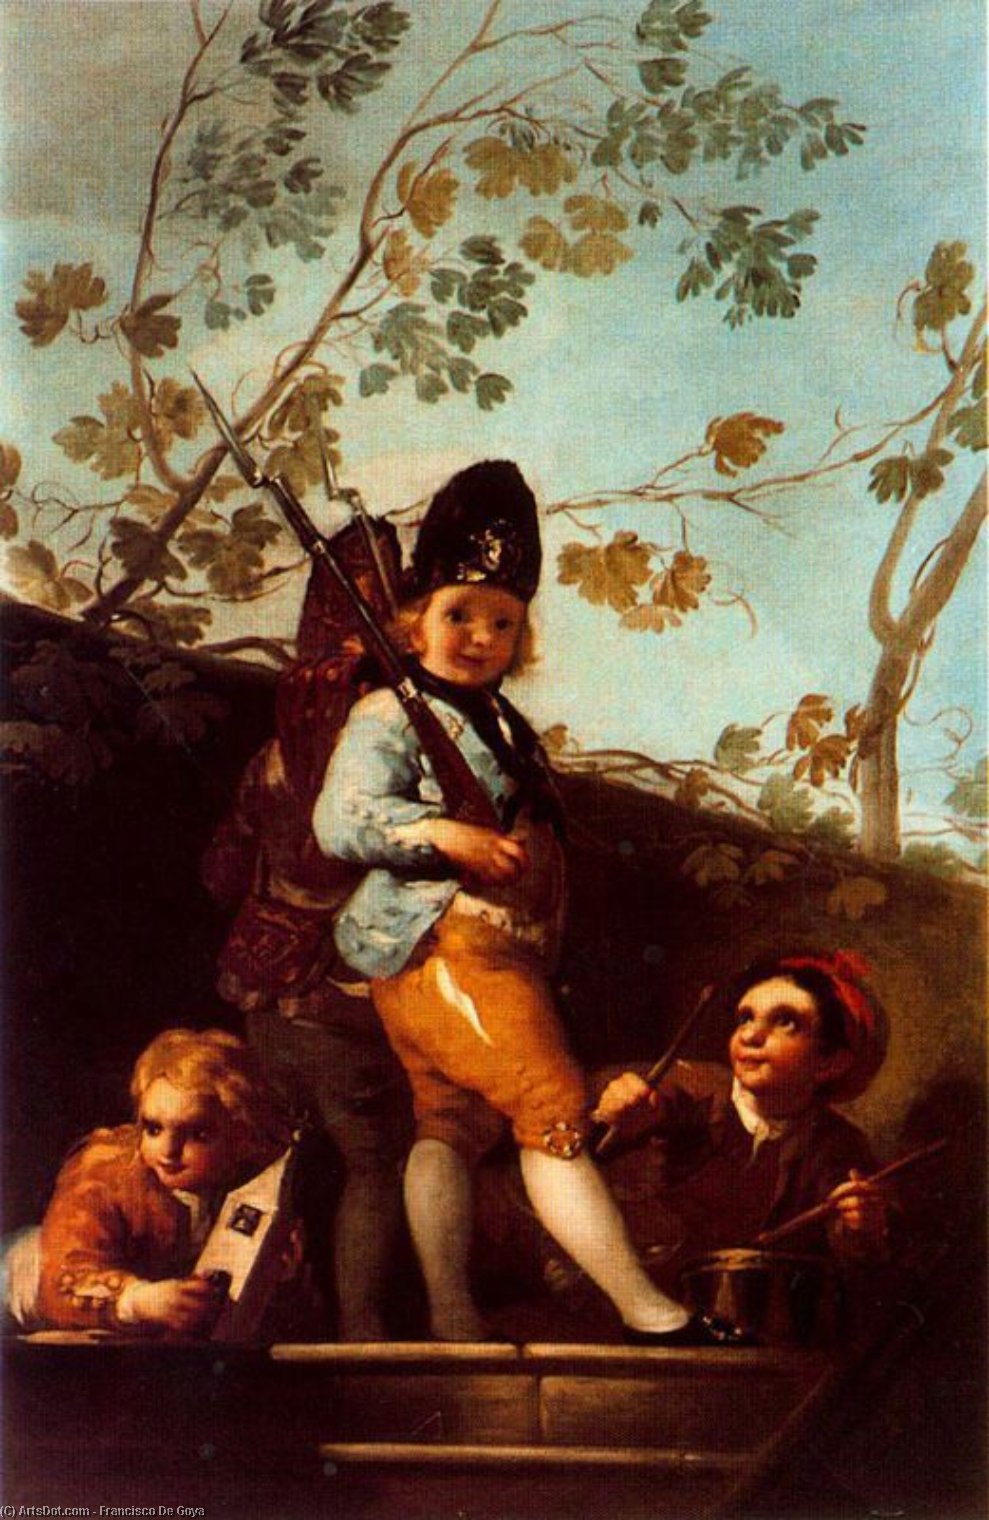 WikiOO.org - Encyclopedia of Fine Arts - Maleri, Artwork Francisco De Goya - Boys playing soldiers